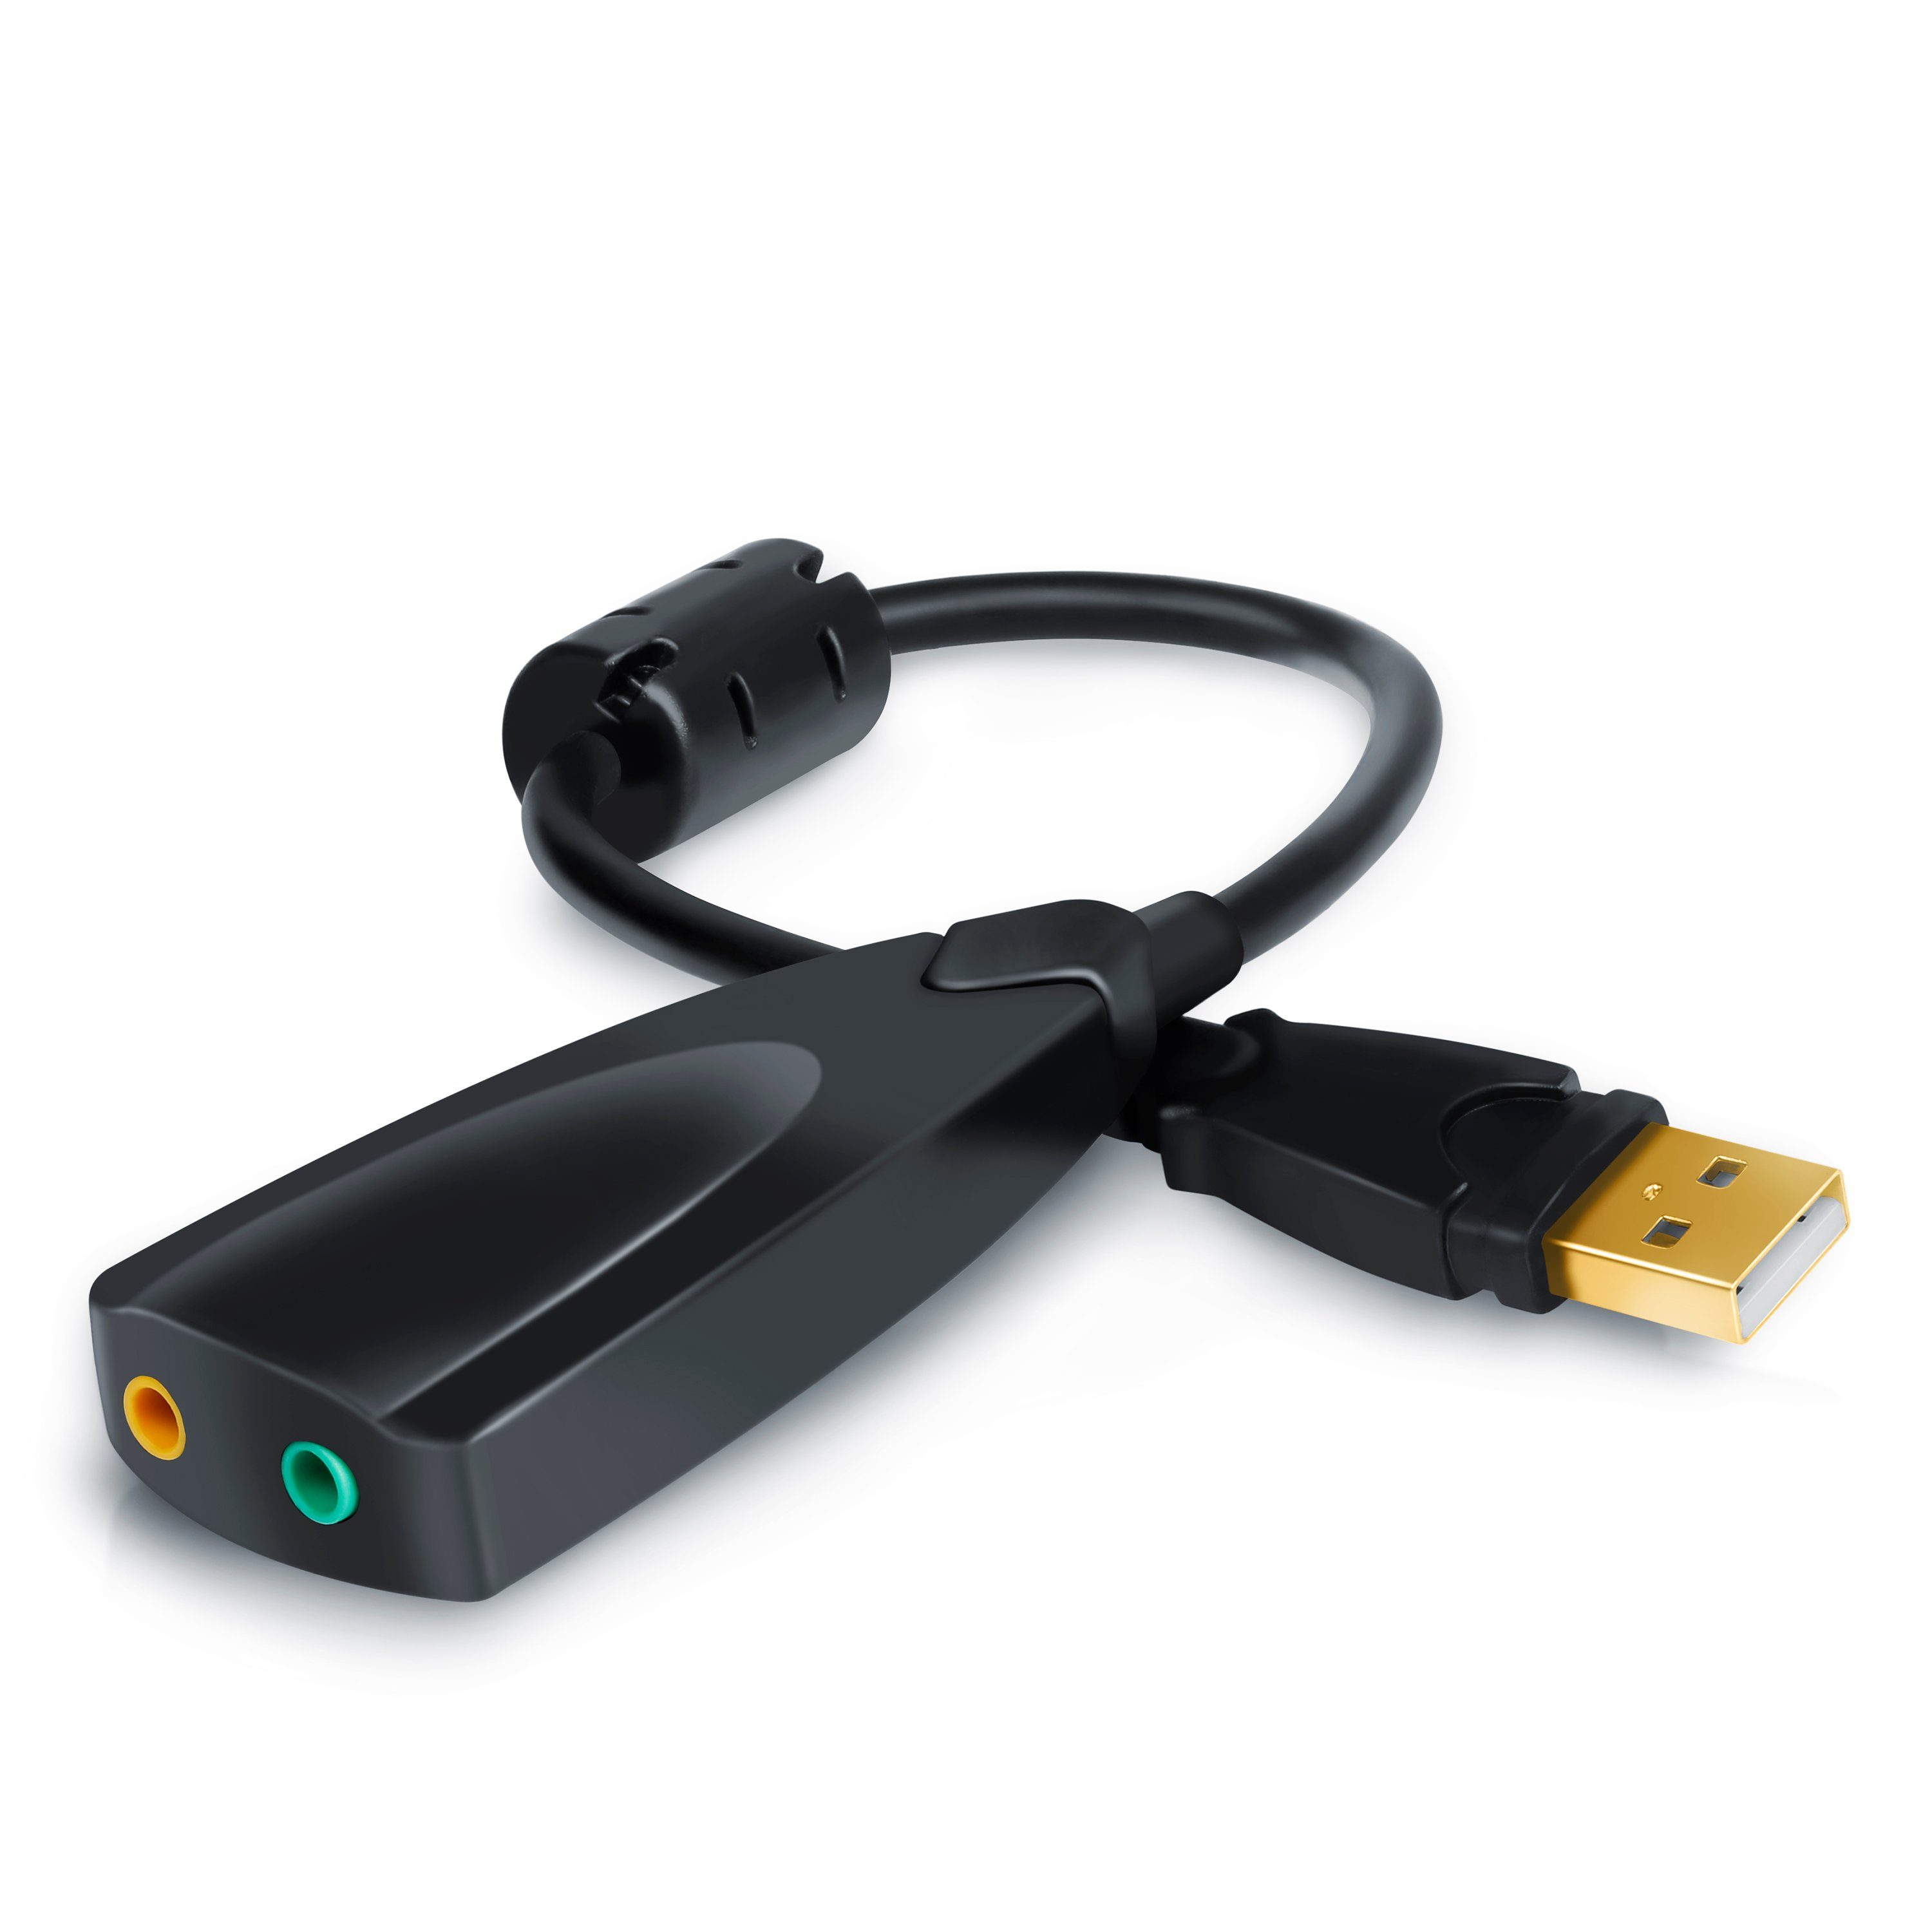 Aplic Soundkarte Virtual 7.1 Surround, externe USB Soundkarte - Windows 10  & Mac OS X kompatibel online kaufen | OTTO